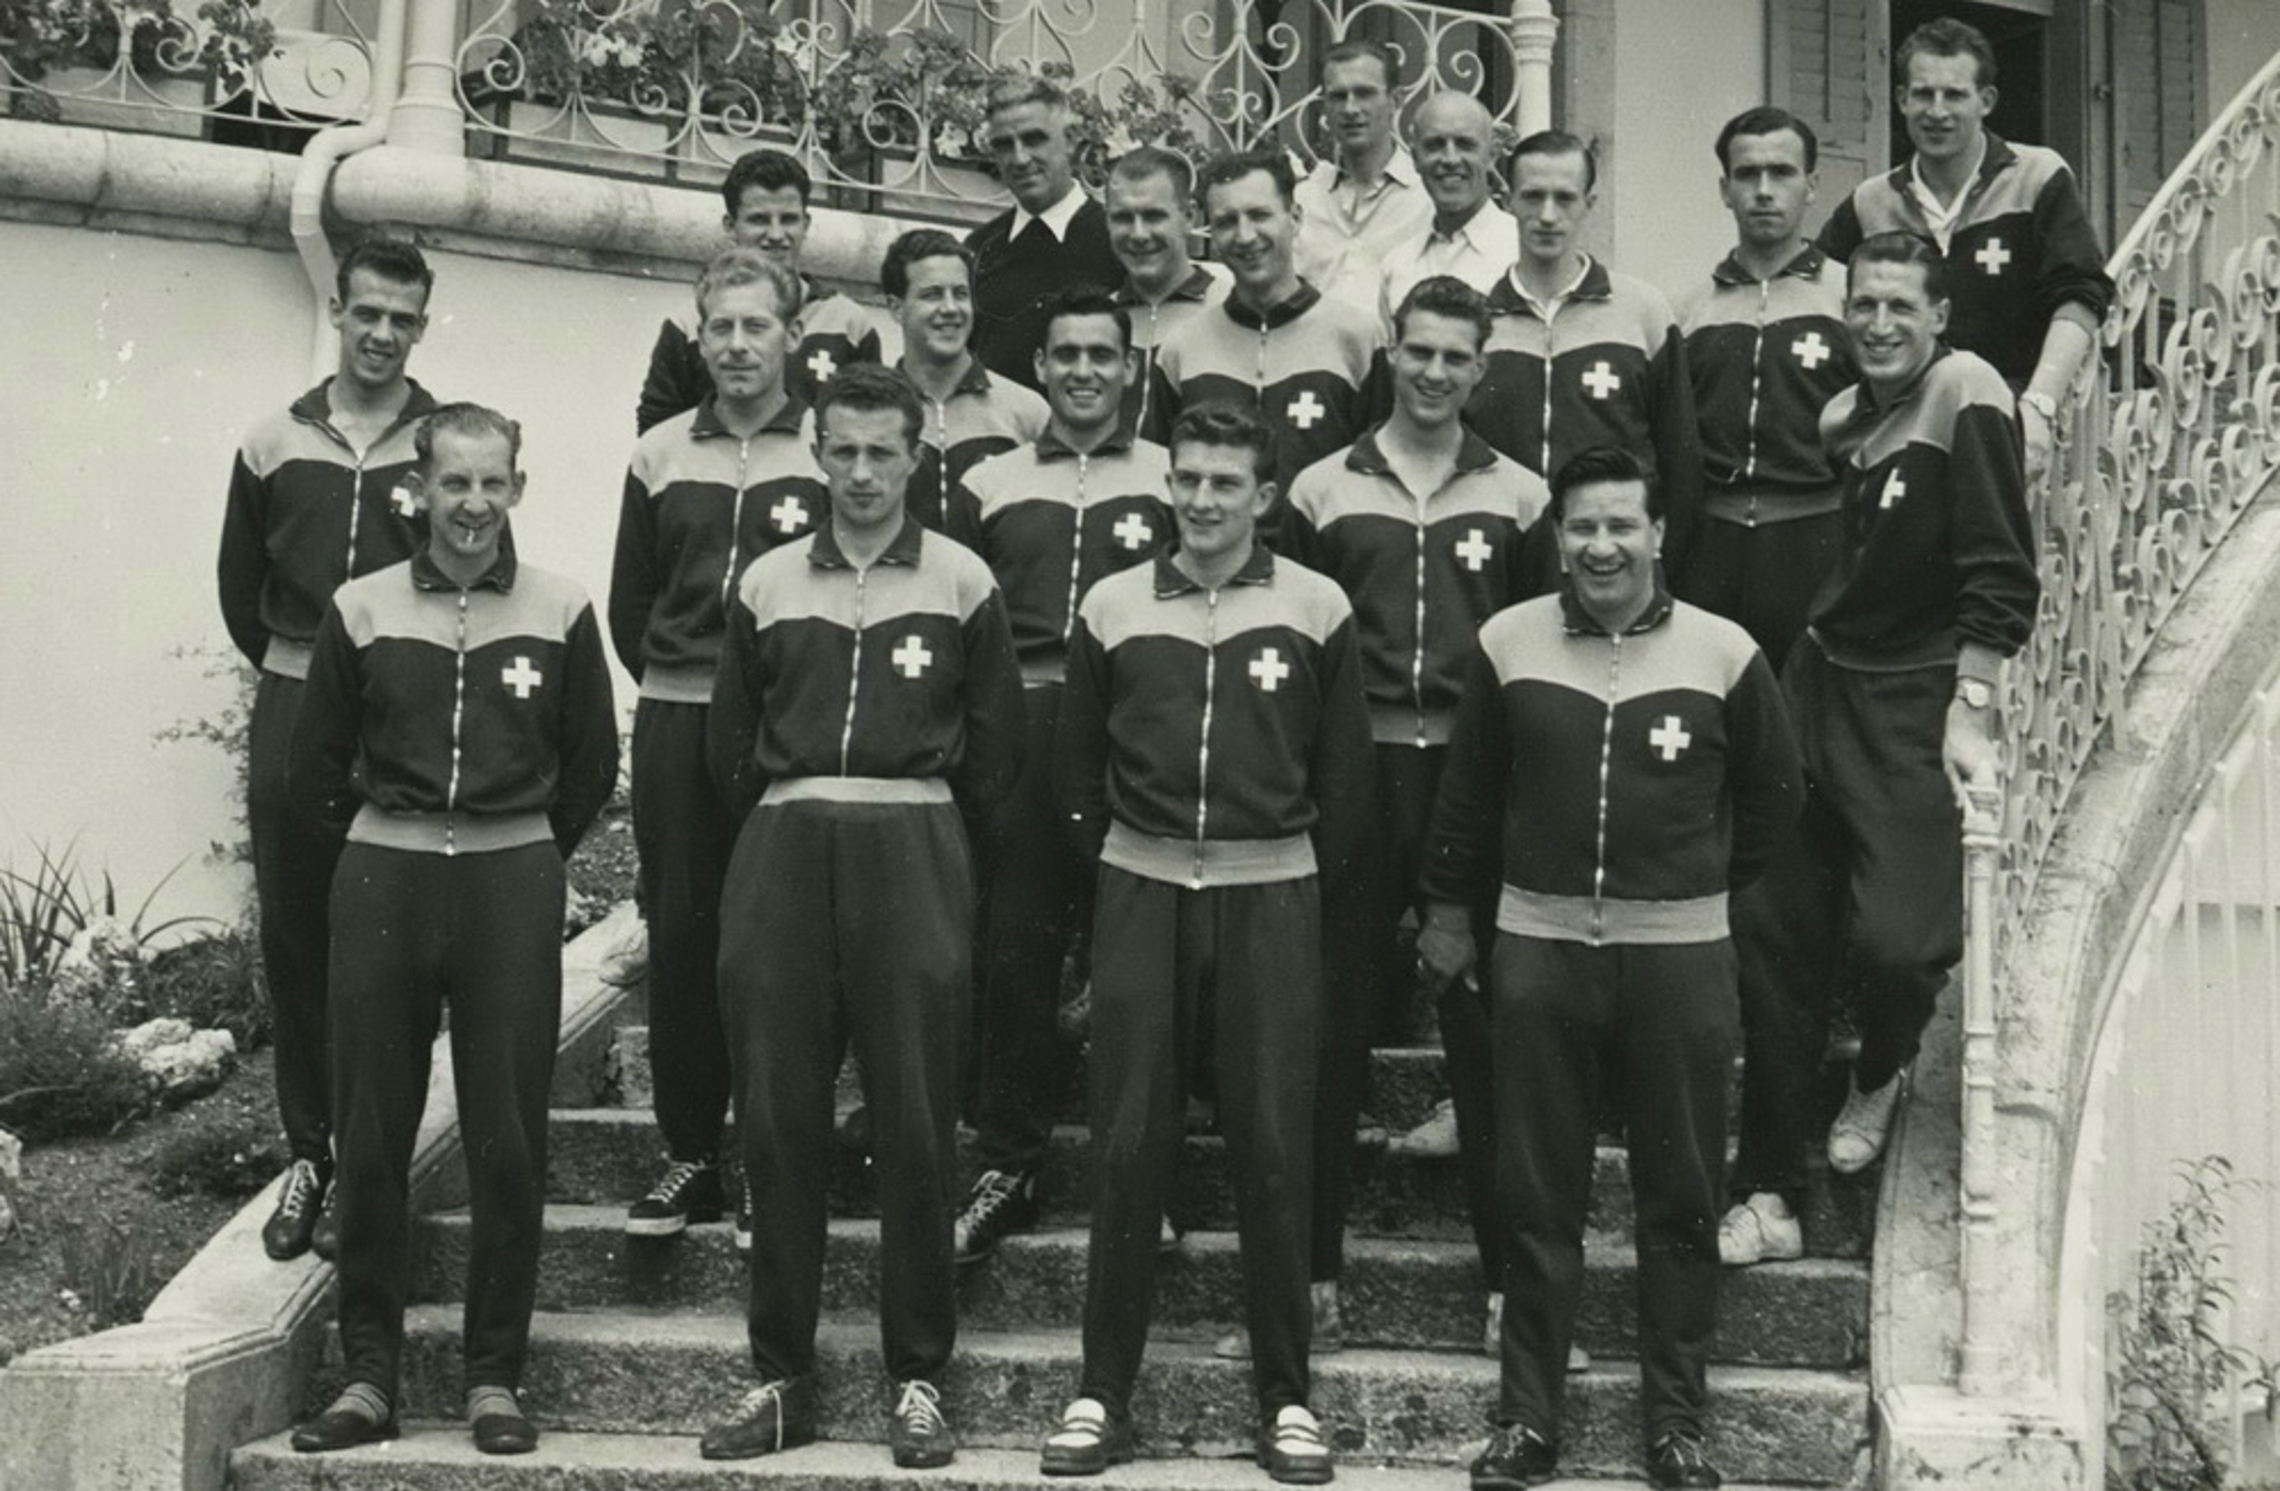 8.-15. Juni 1952 3. Feldhandball-Weltmeisterschaft in der Schweiz - Basislager Magglingen